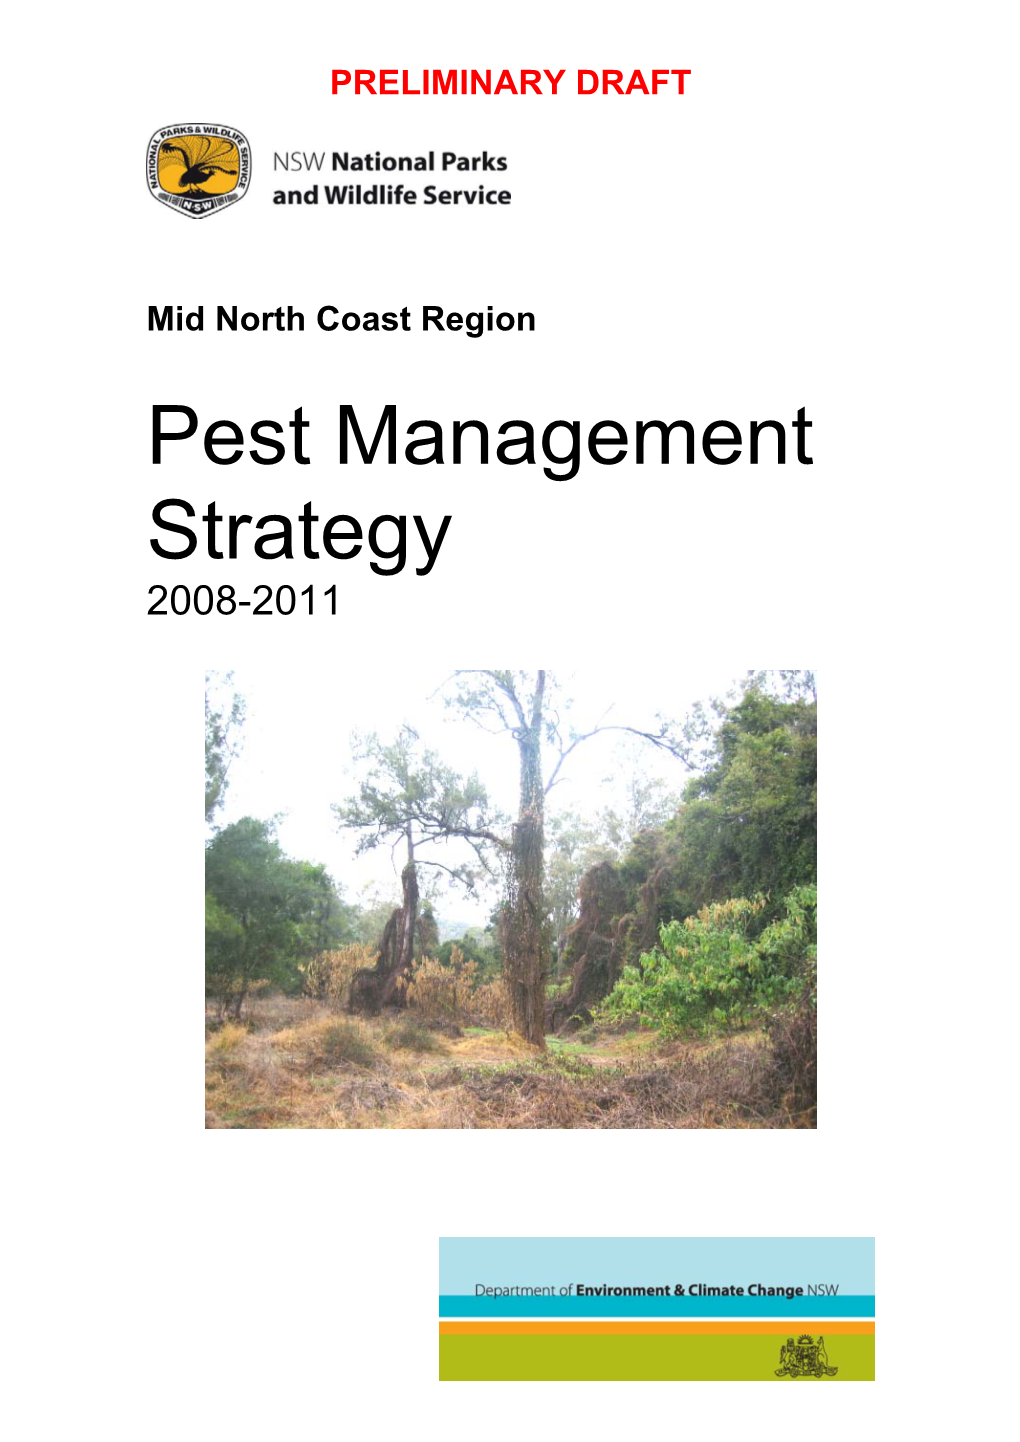 Mid North Coast Region Pest Management Strategy 2008-2011